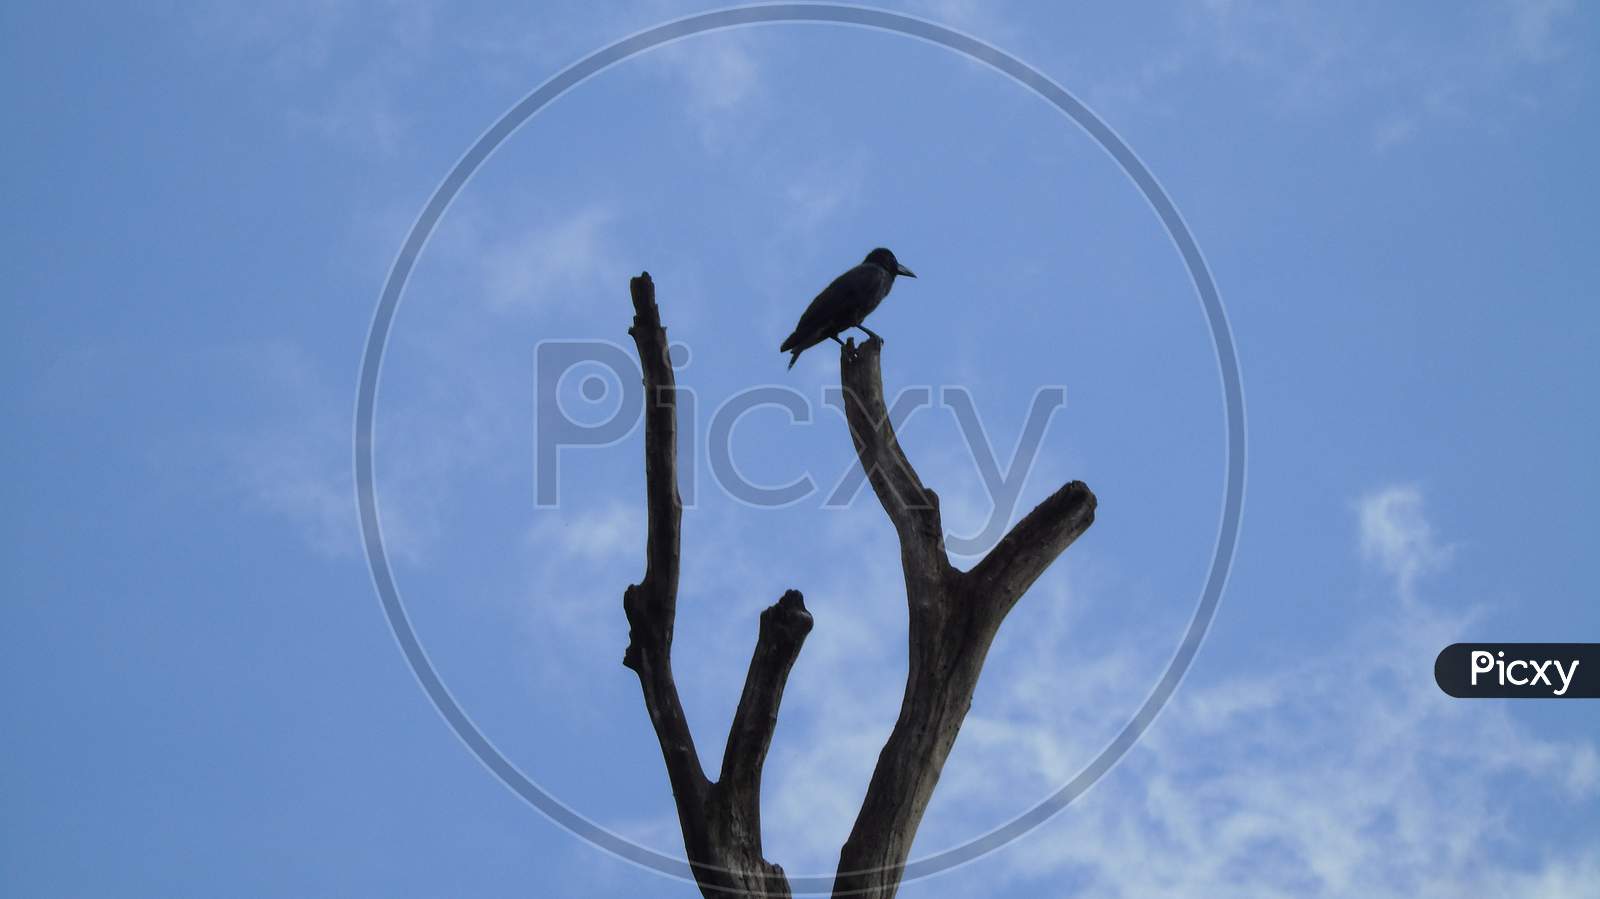 A bird sitting on dead tree branch